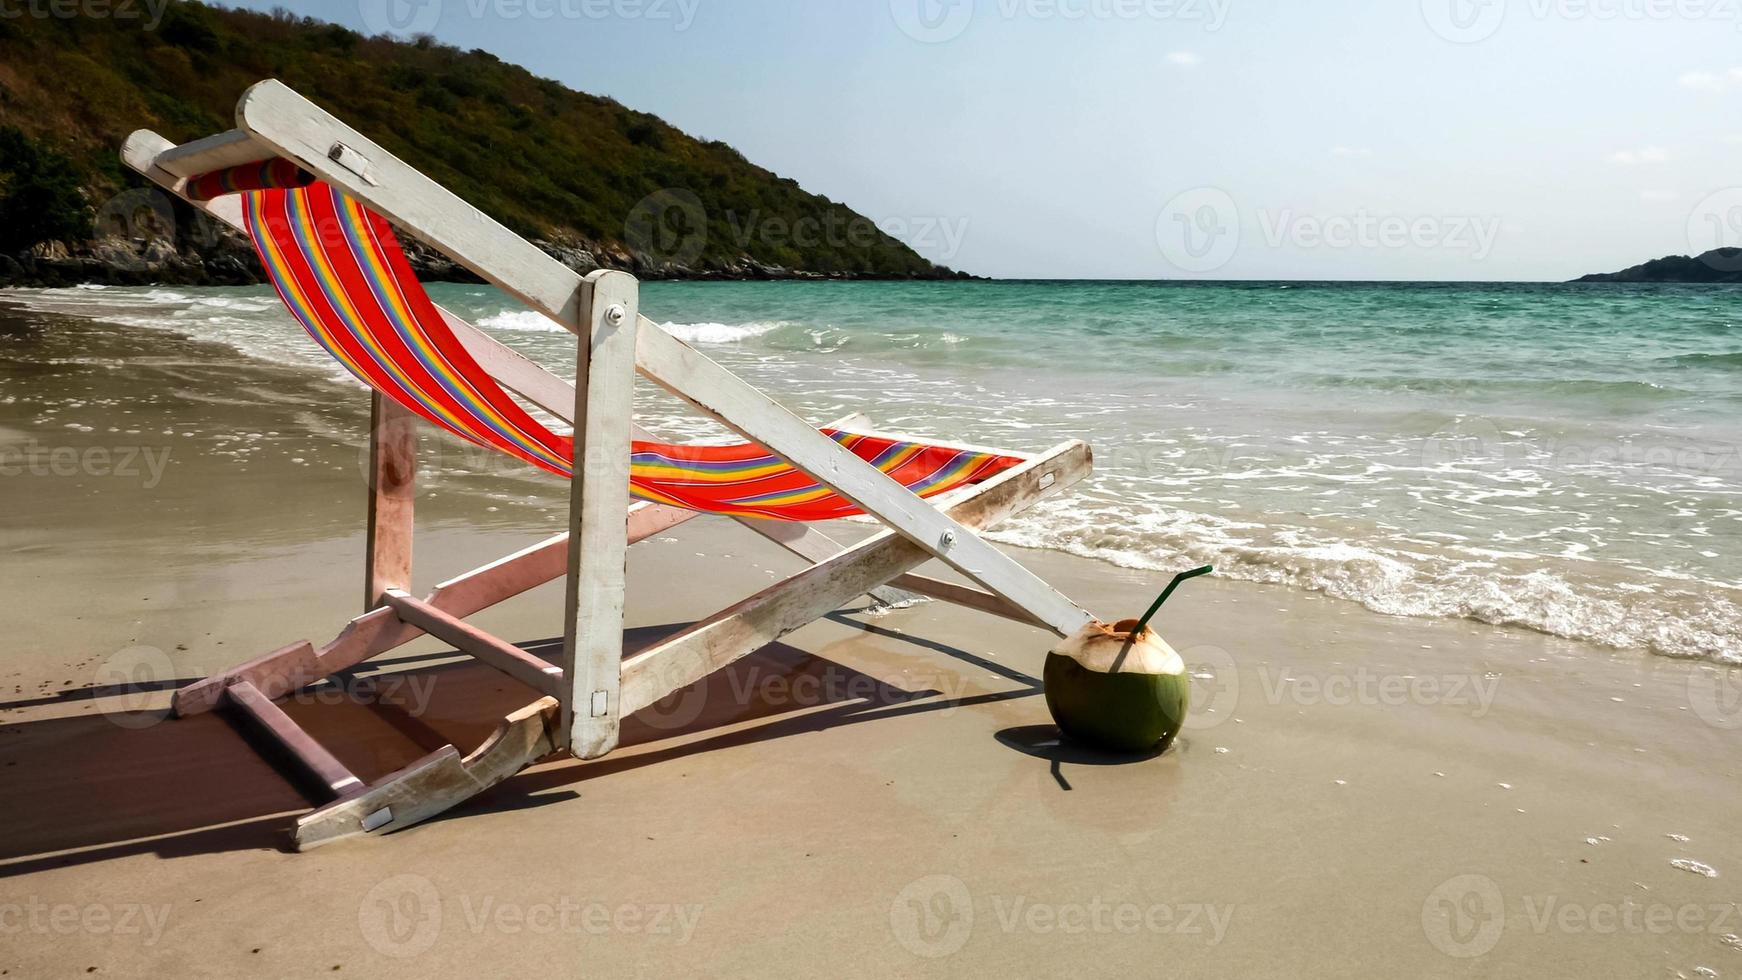 Colourful beach chair and peeled coconut on the beach. photo